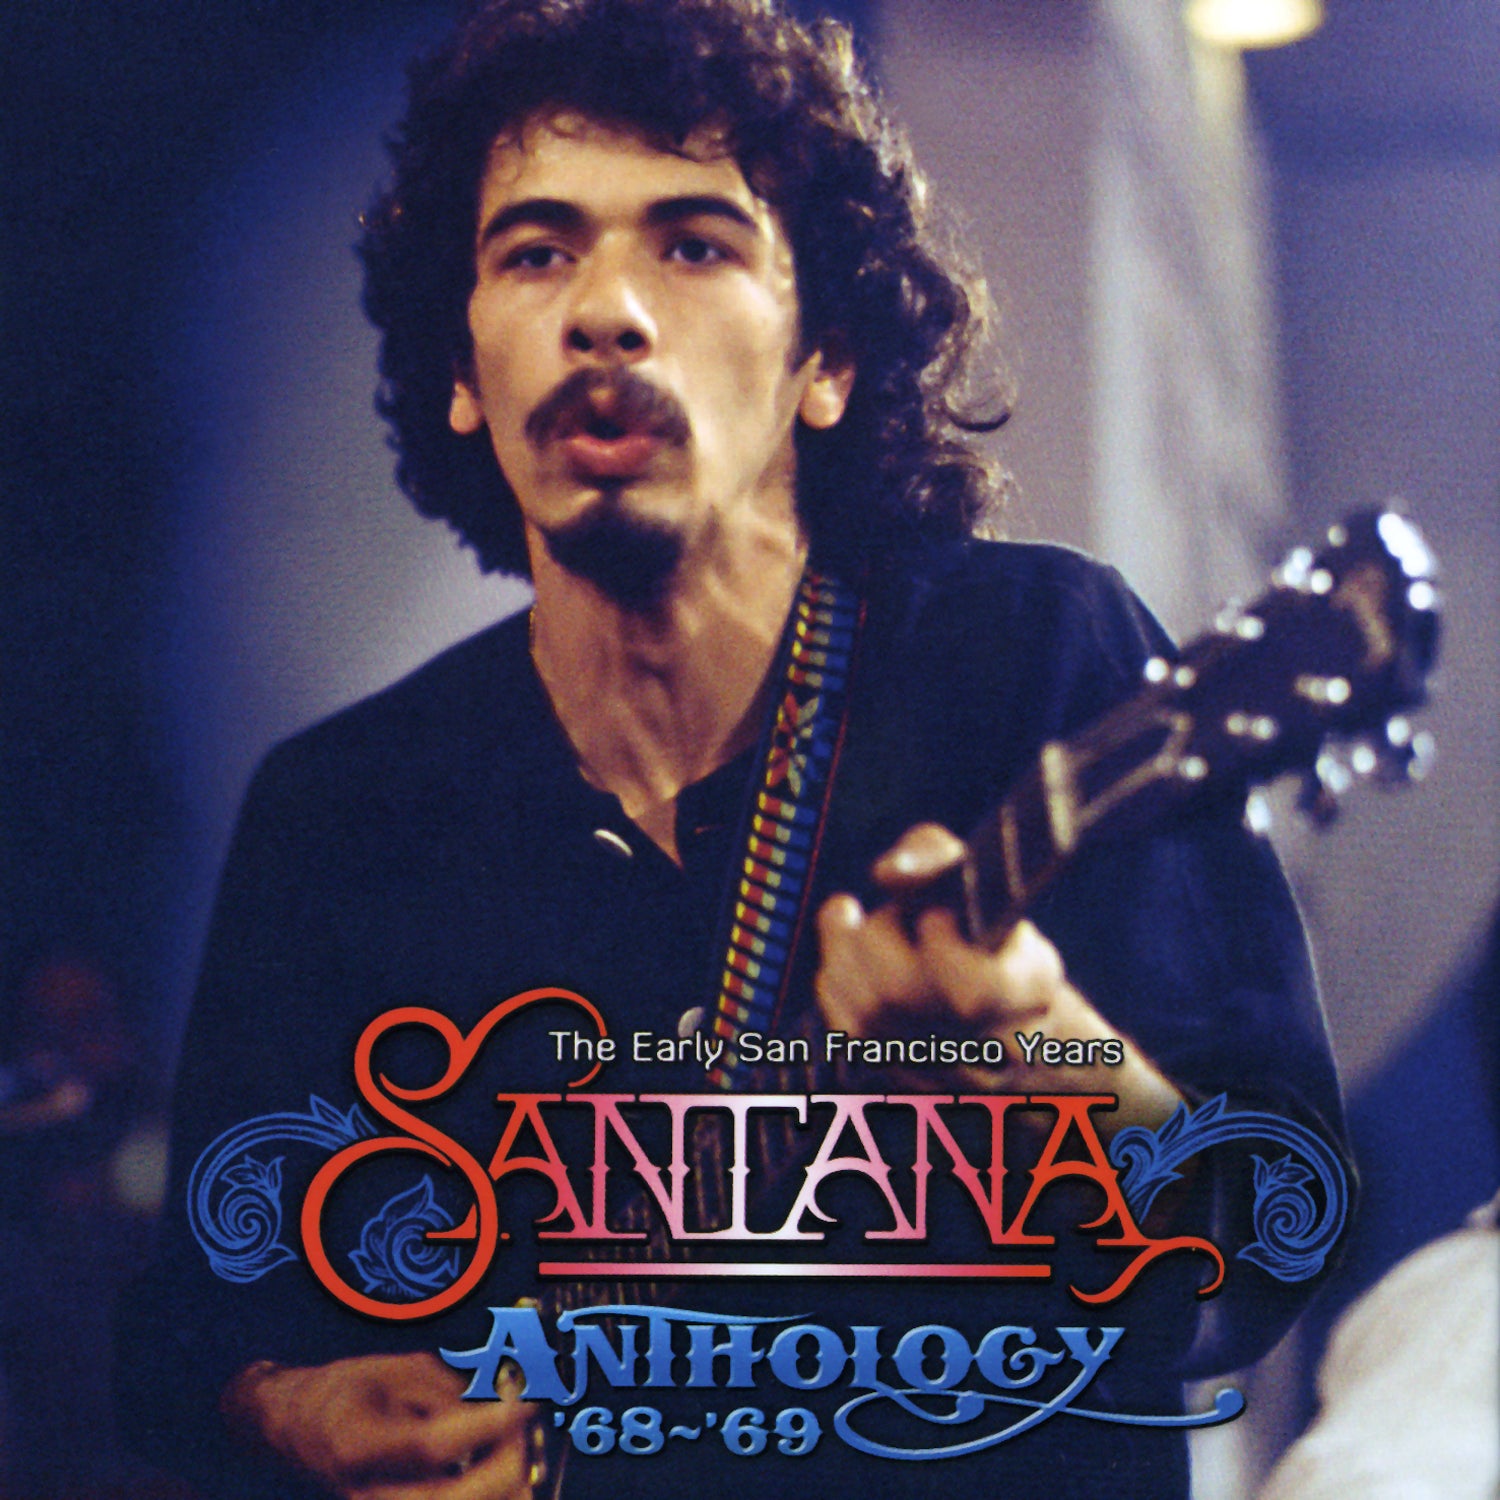 Santana The Anthology ‘68-’69 - The Early San Francisco Years